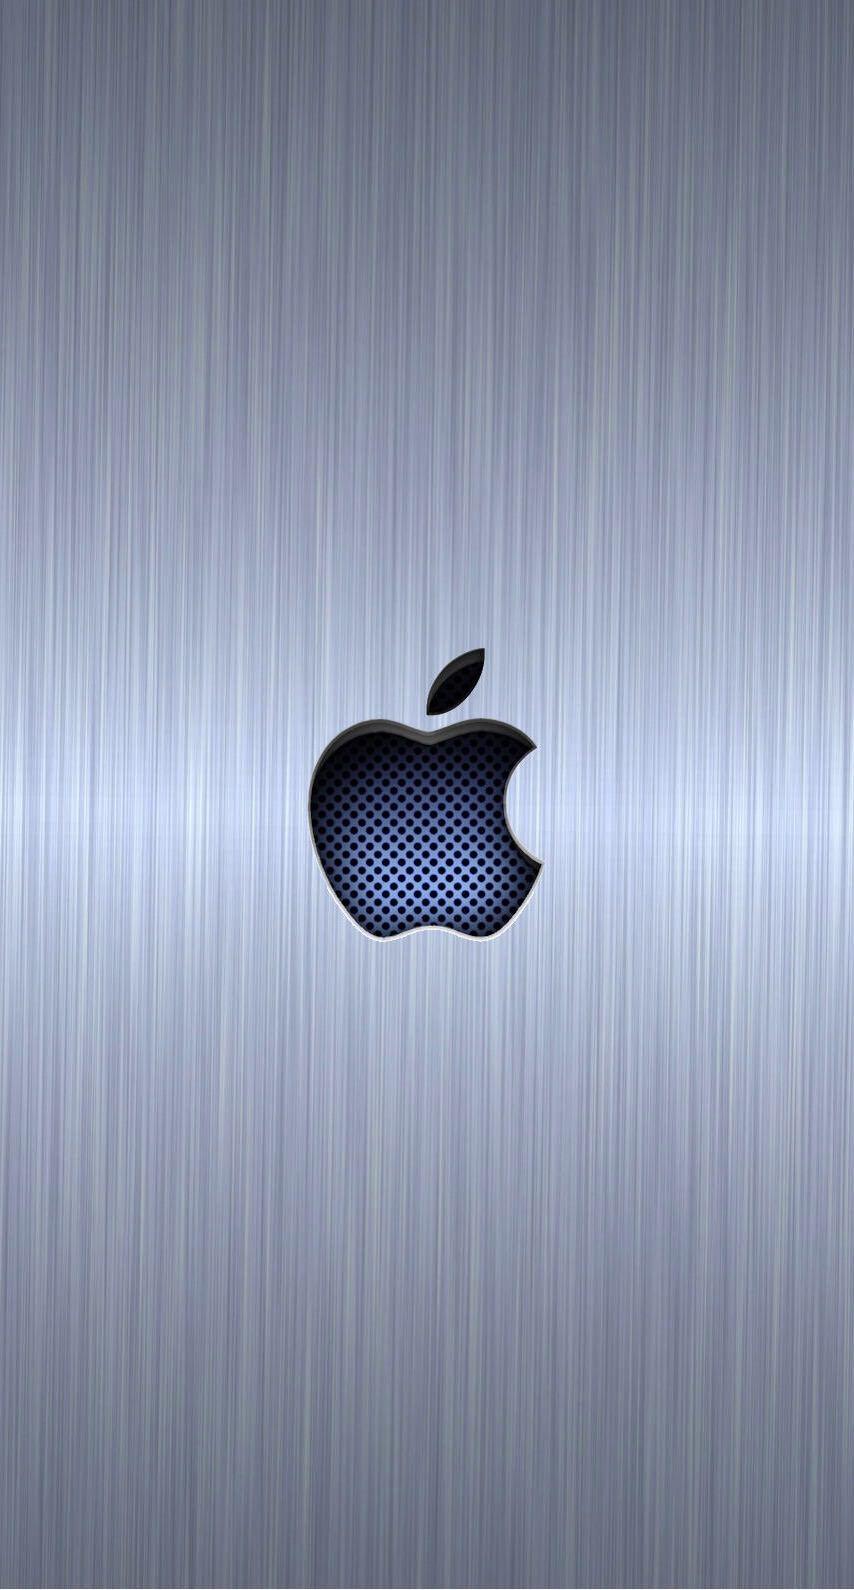 Silver 6 Logo - Apple logo cool blue silver | wallpaper.sc iPhone6s | Apple Fever ...